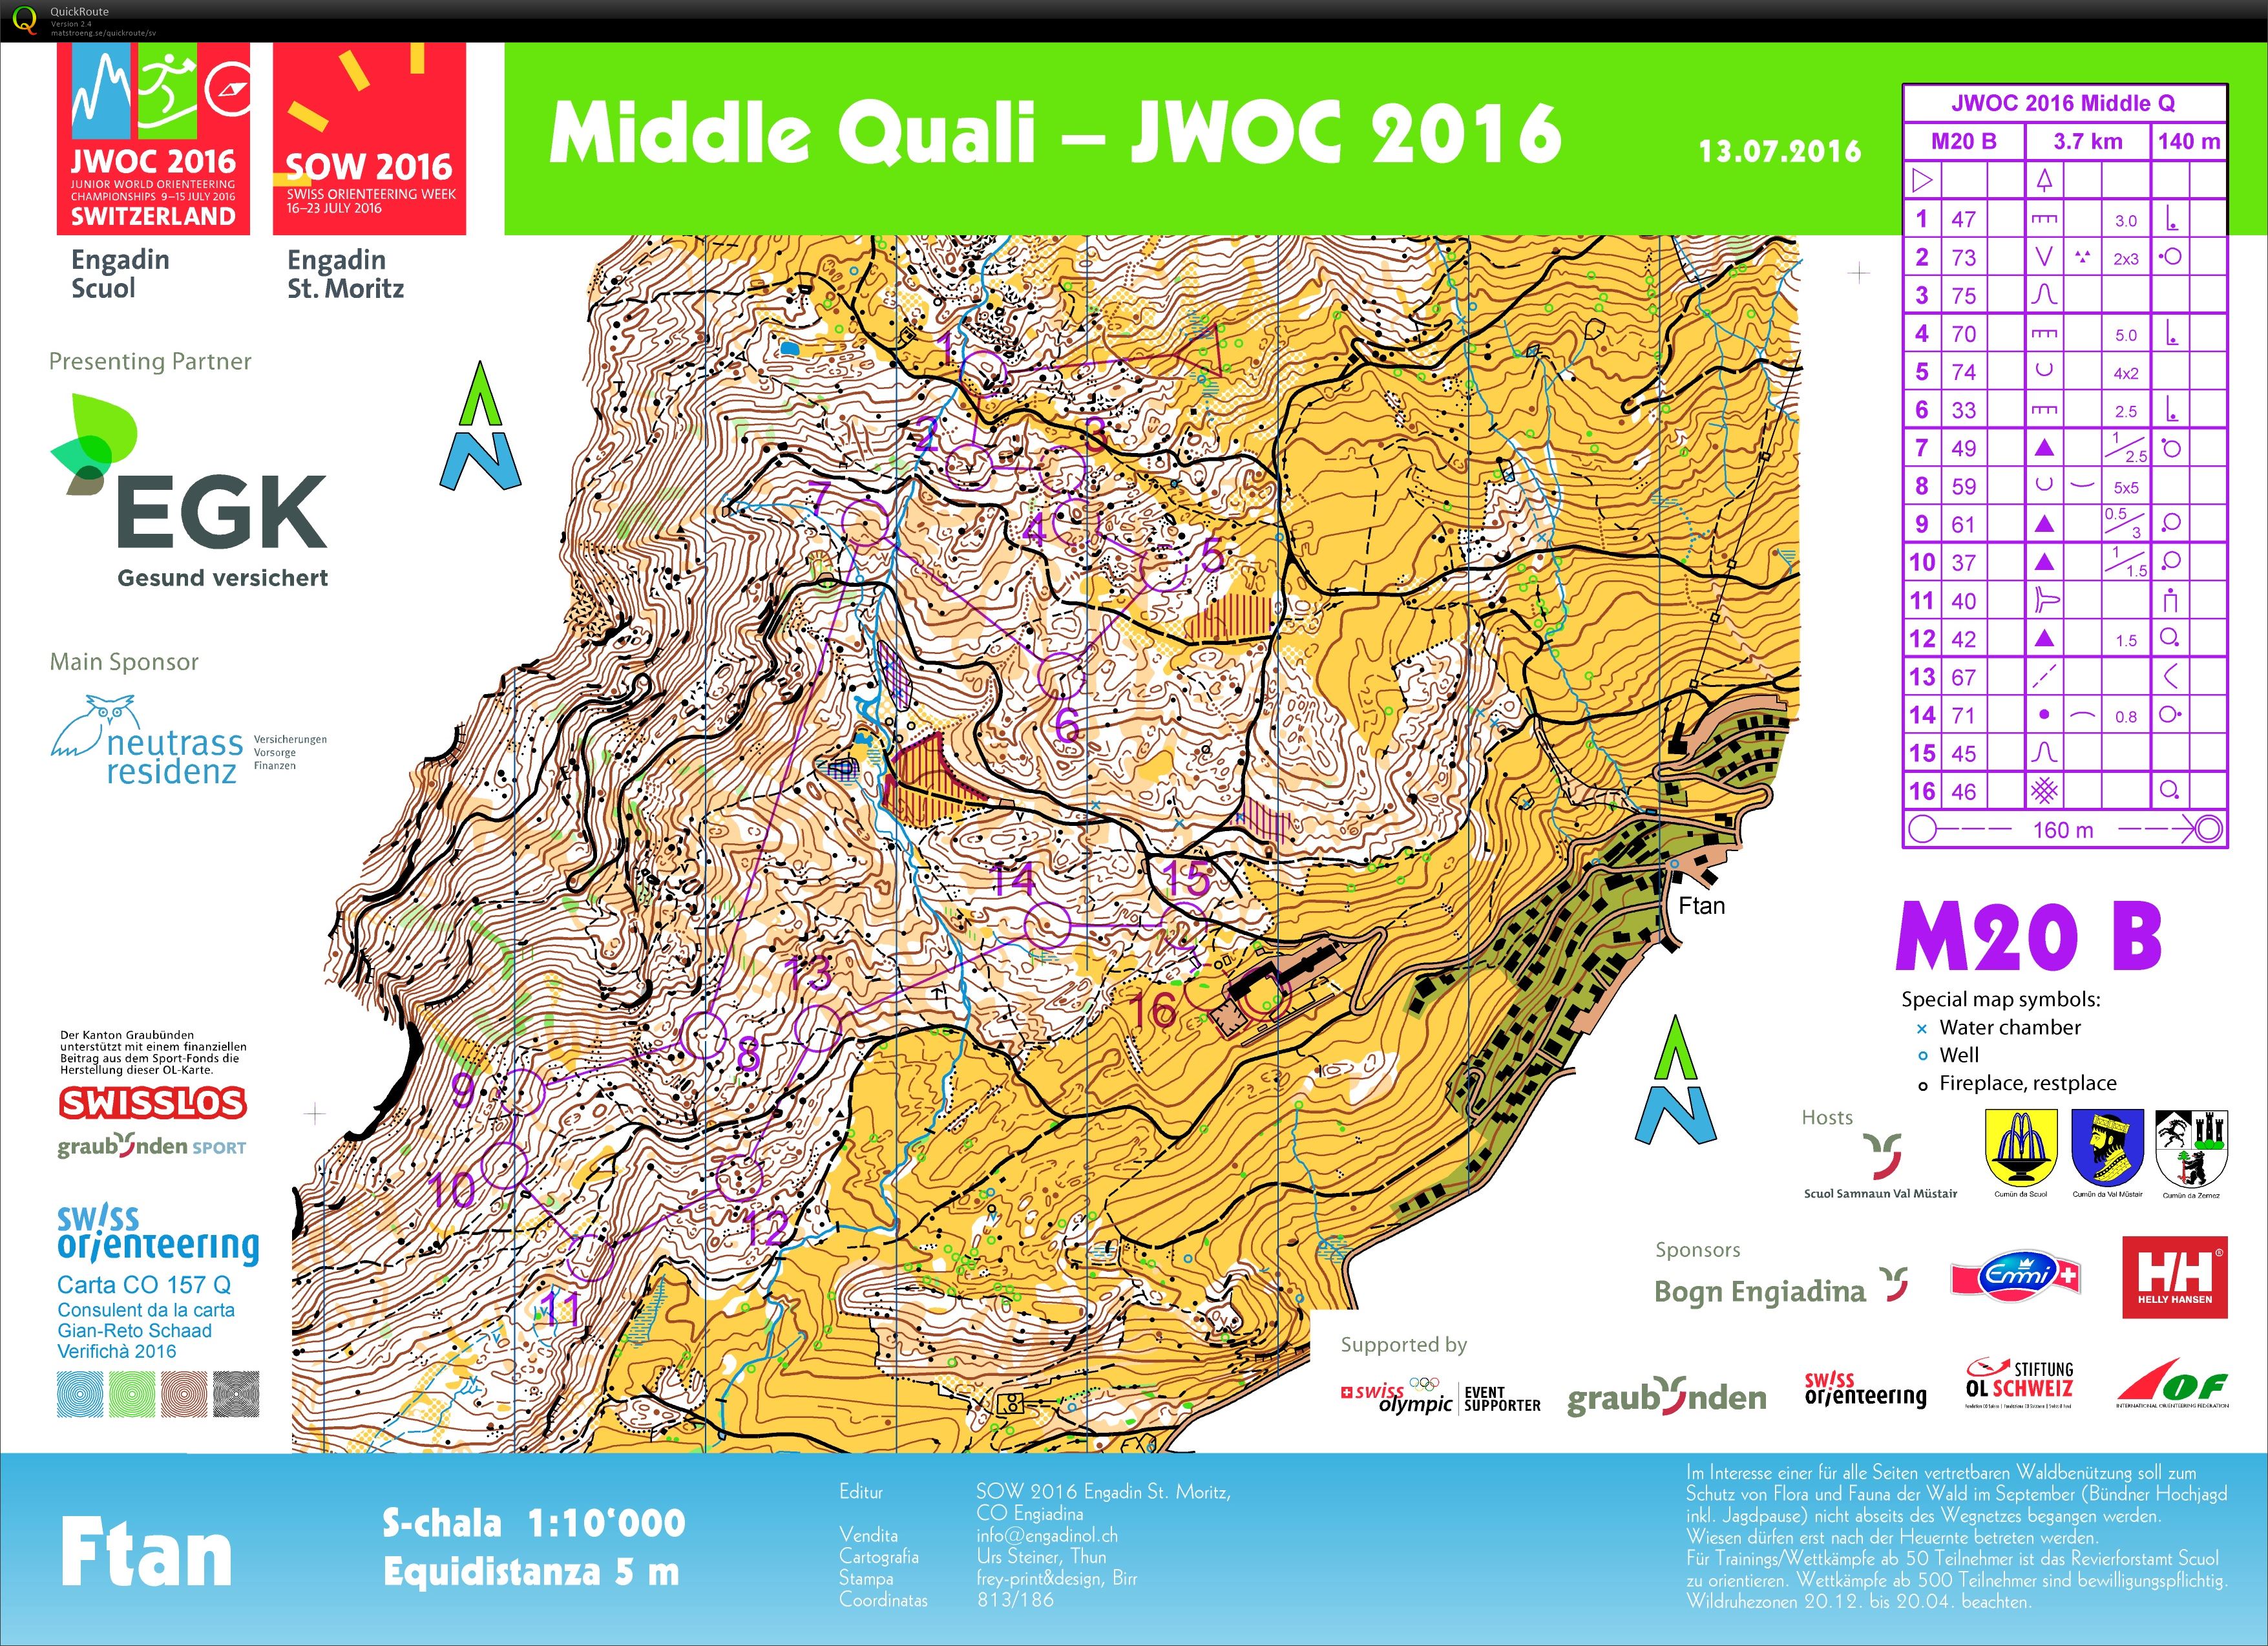 JWOC Middle Qualification heat B (13/07/2016)